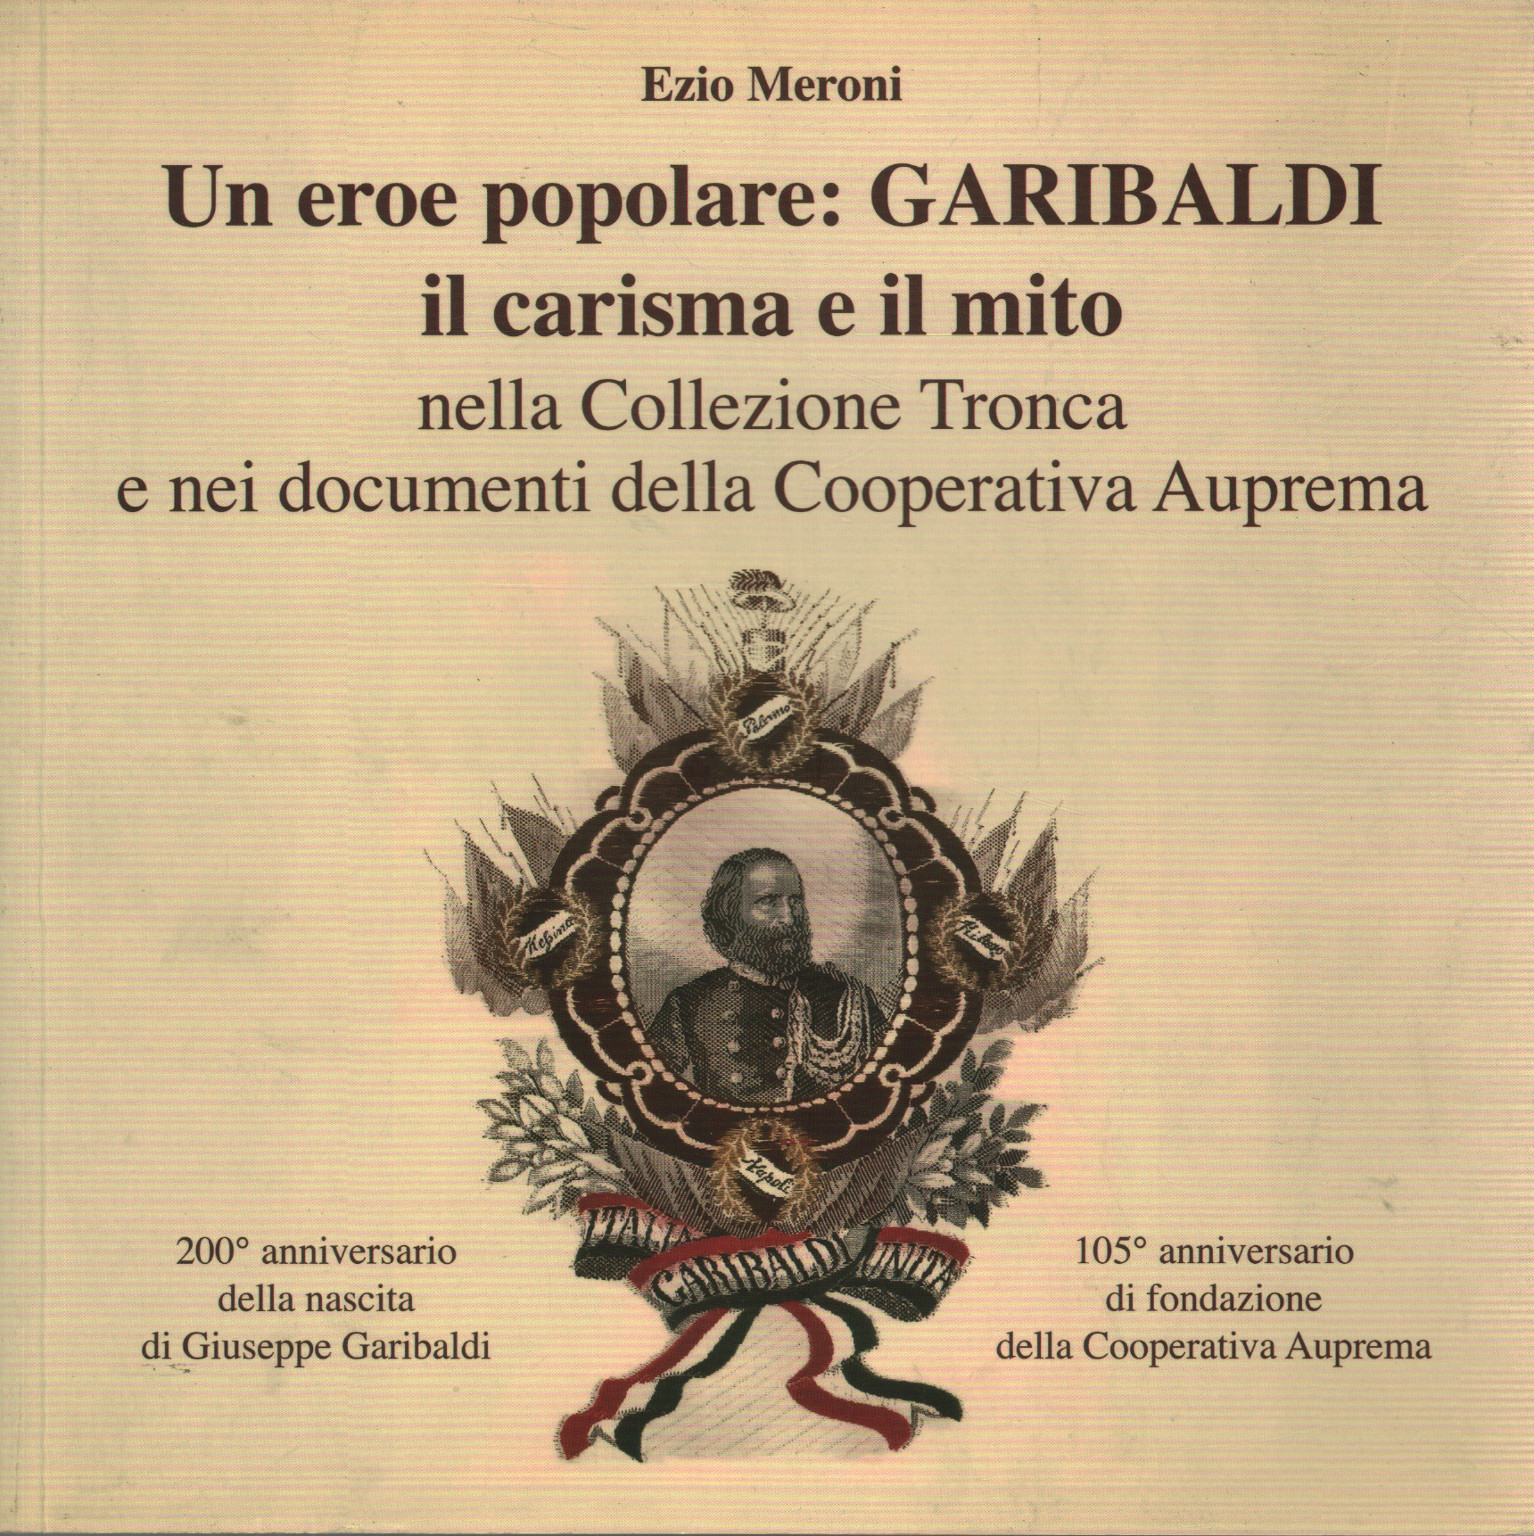 A popular hero: GARIBALDI, the charisma and the legend, s.a.